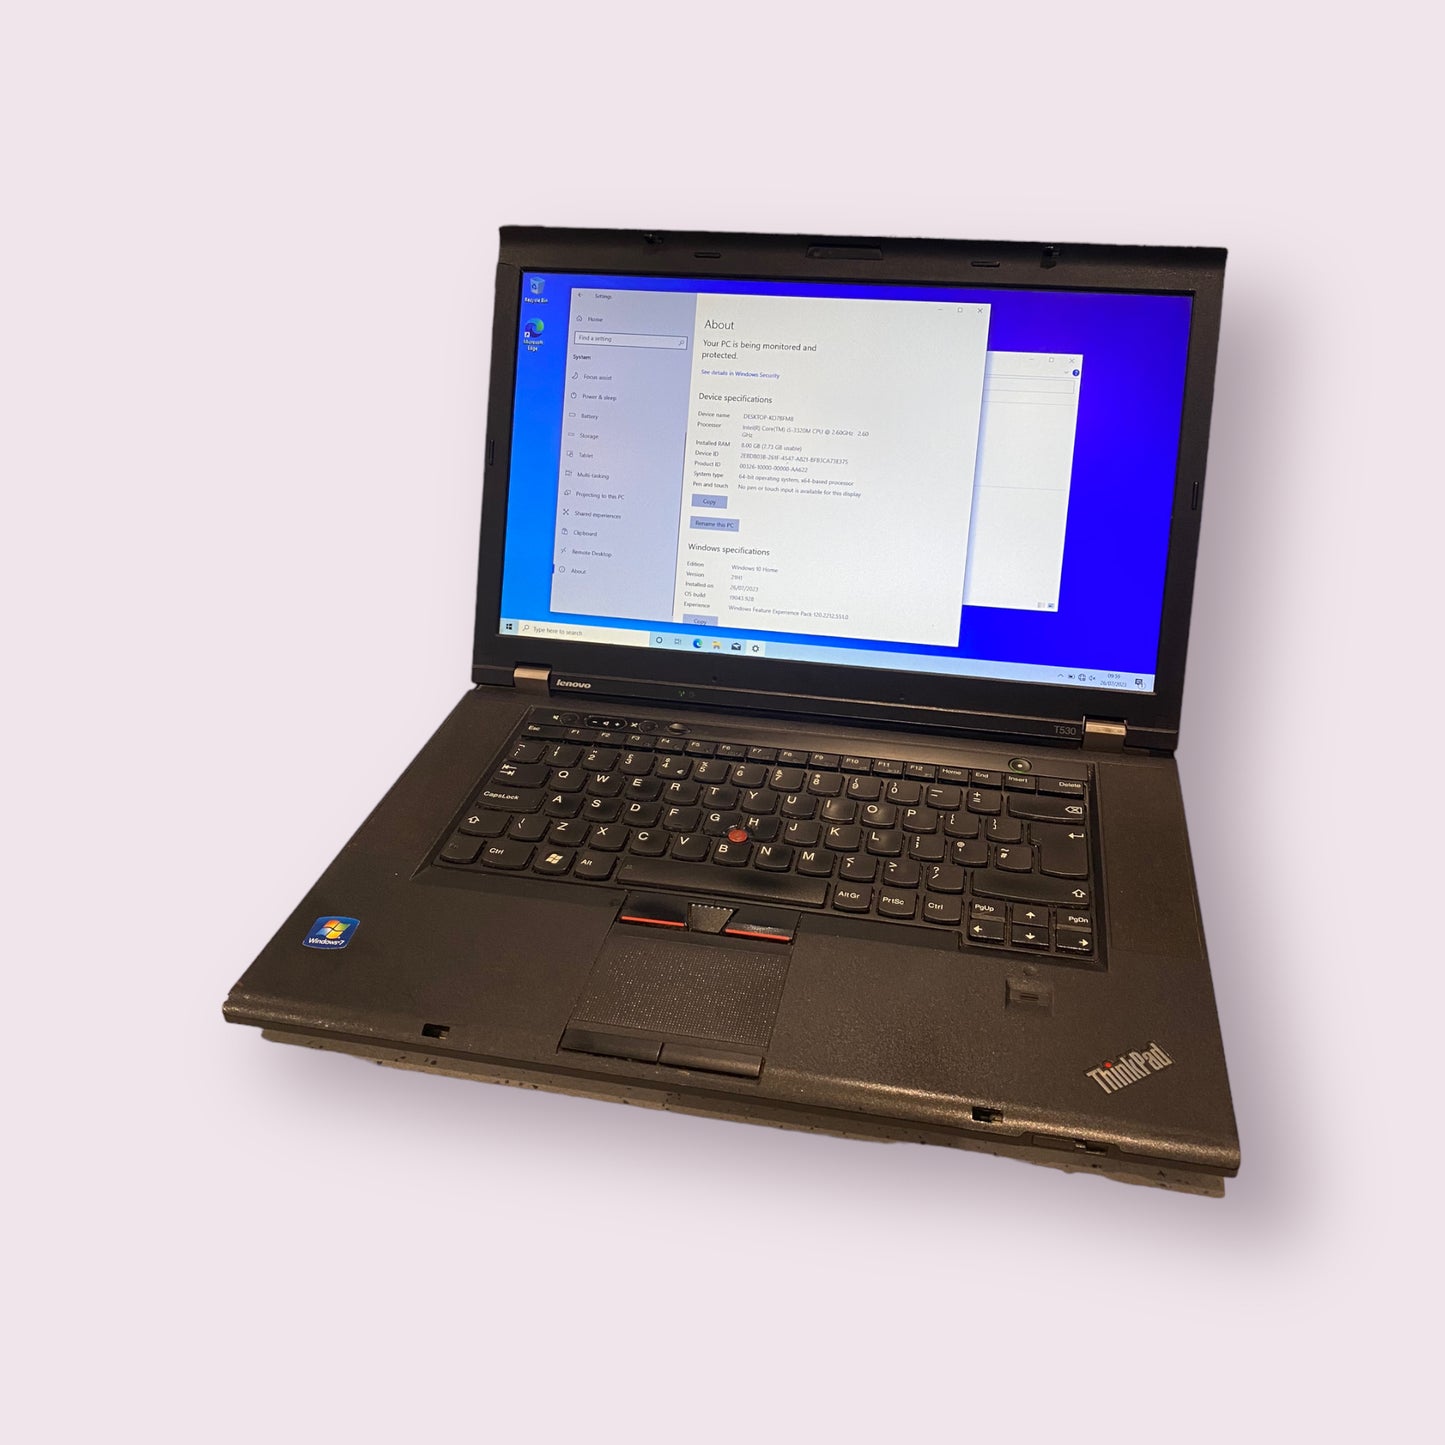 Lenovo Thinkpad T530 Windows 10 Laptop 8GB RAM 240GB SSD Intel Core i5-3320 @ 2.6 GHz